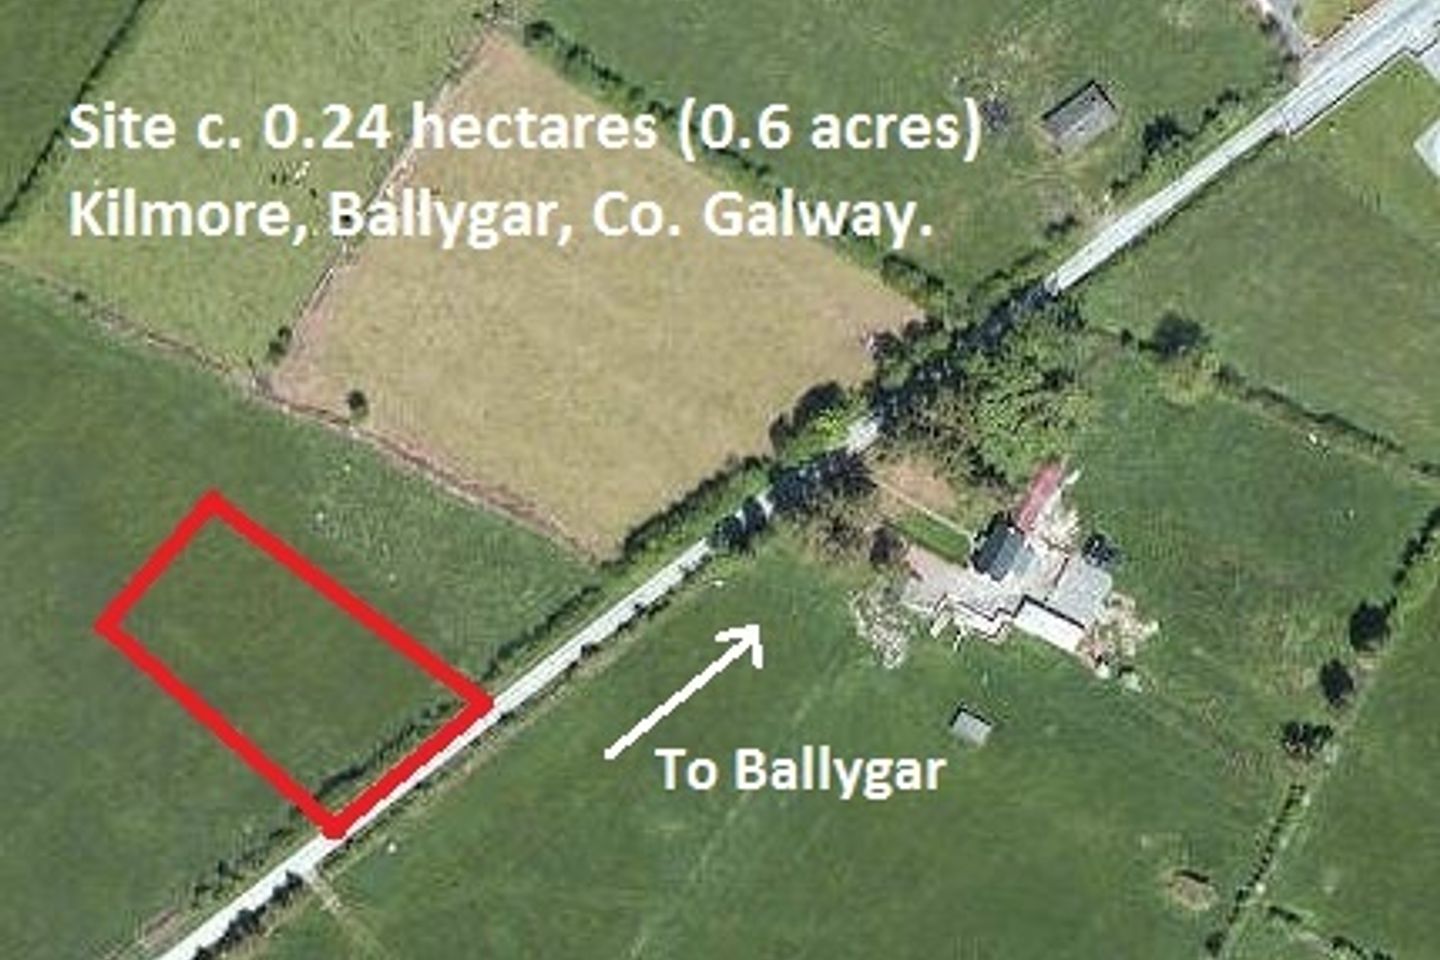 Kilmore, Ballygar, Co. Galway